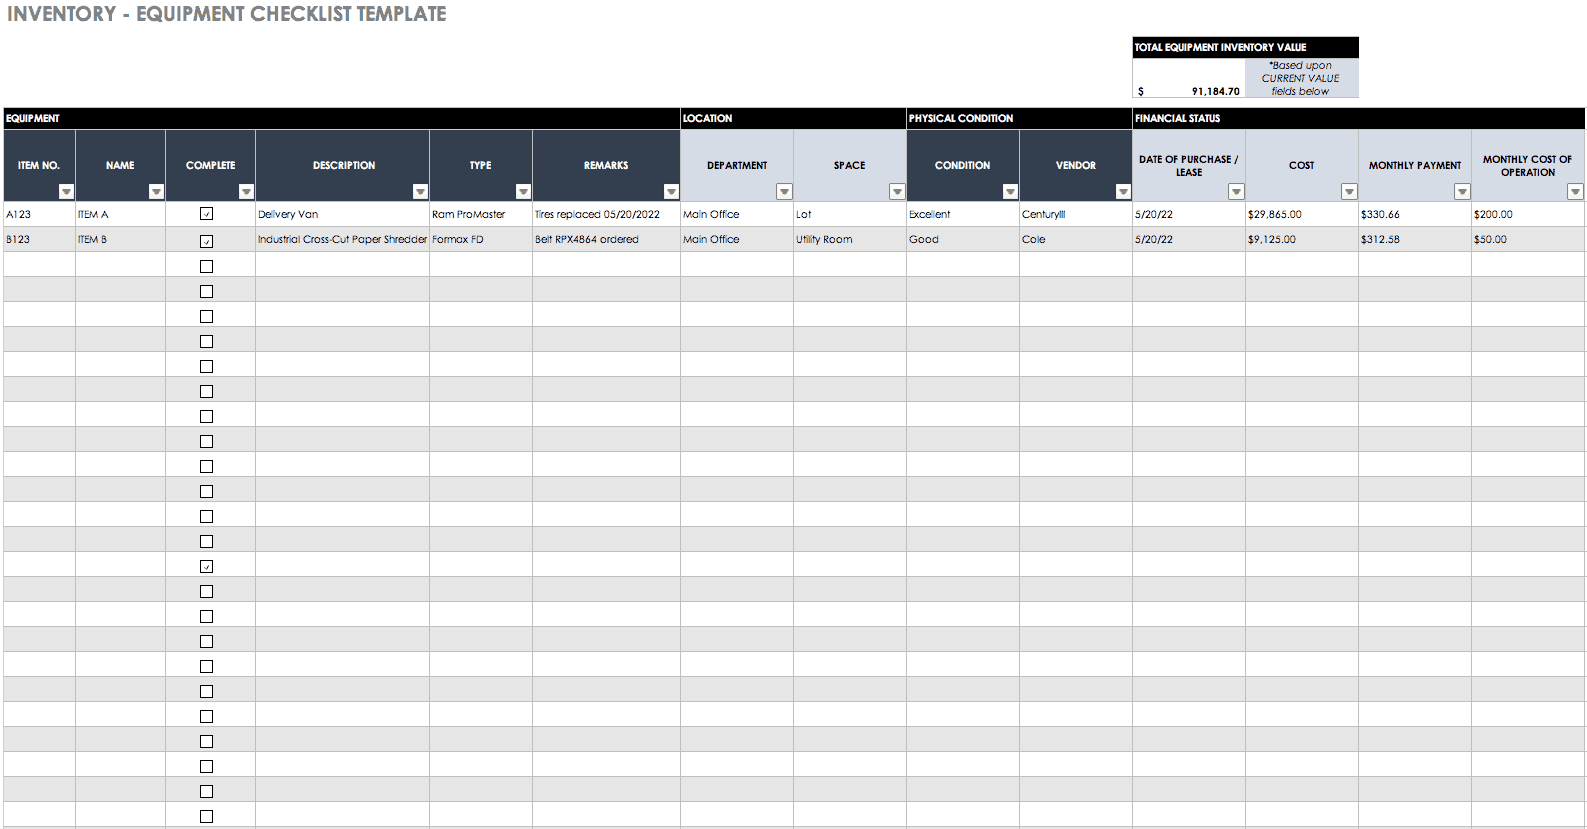 excel spreadsheet checklist templates